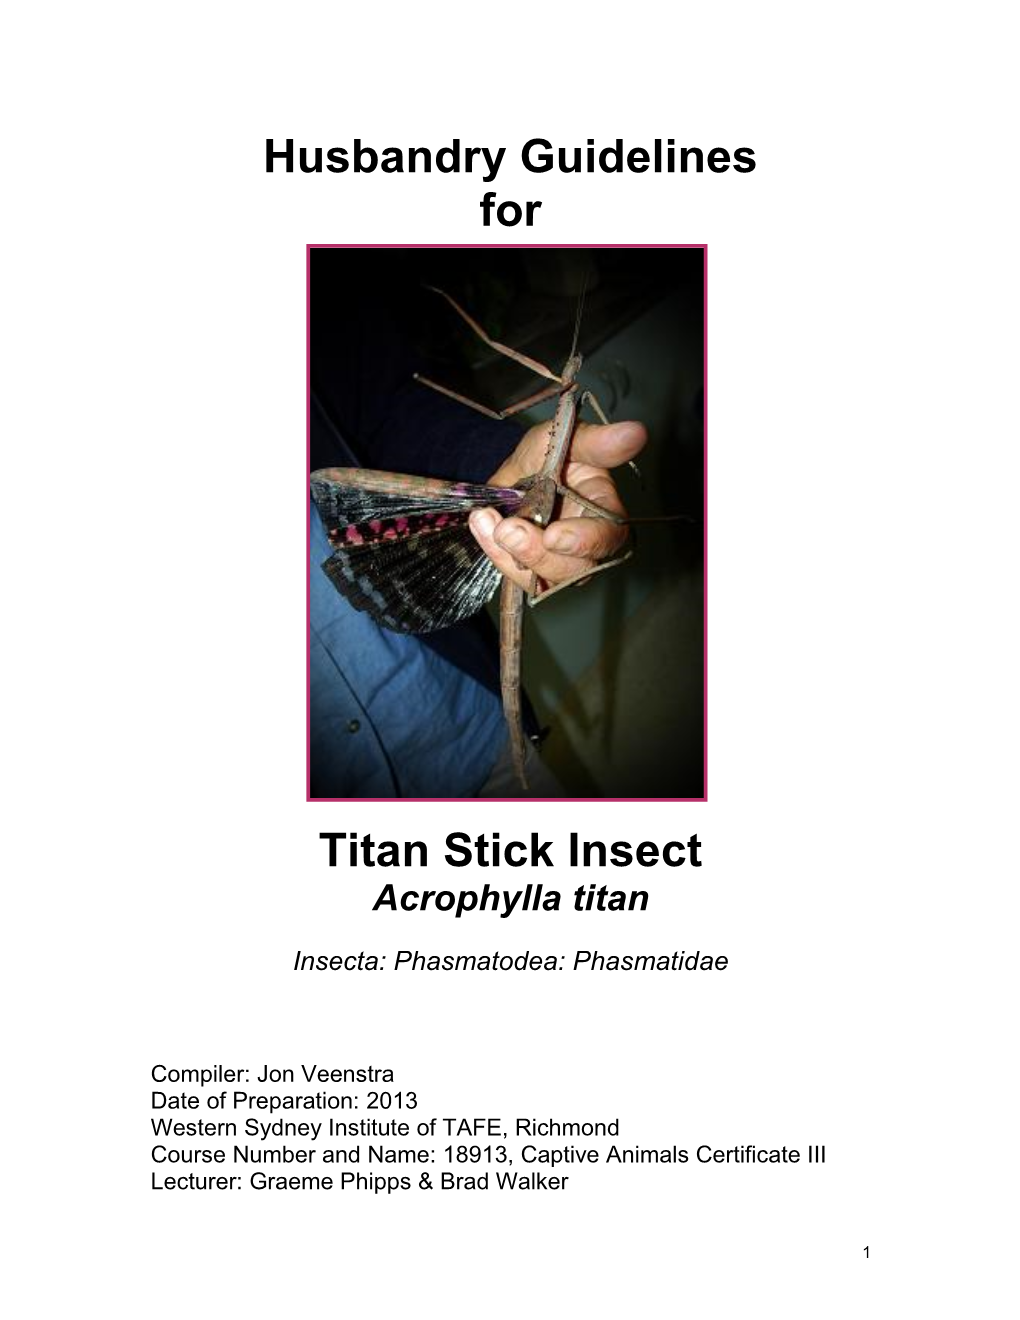 Titan Stick Insect Acrophylla Titan